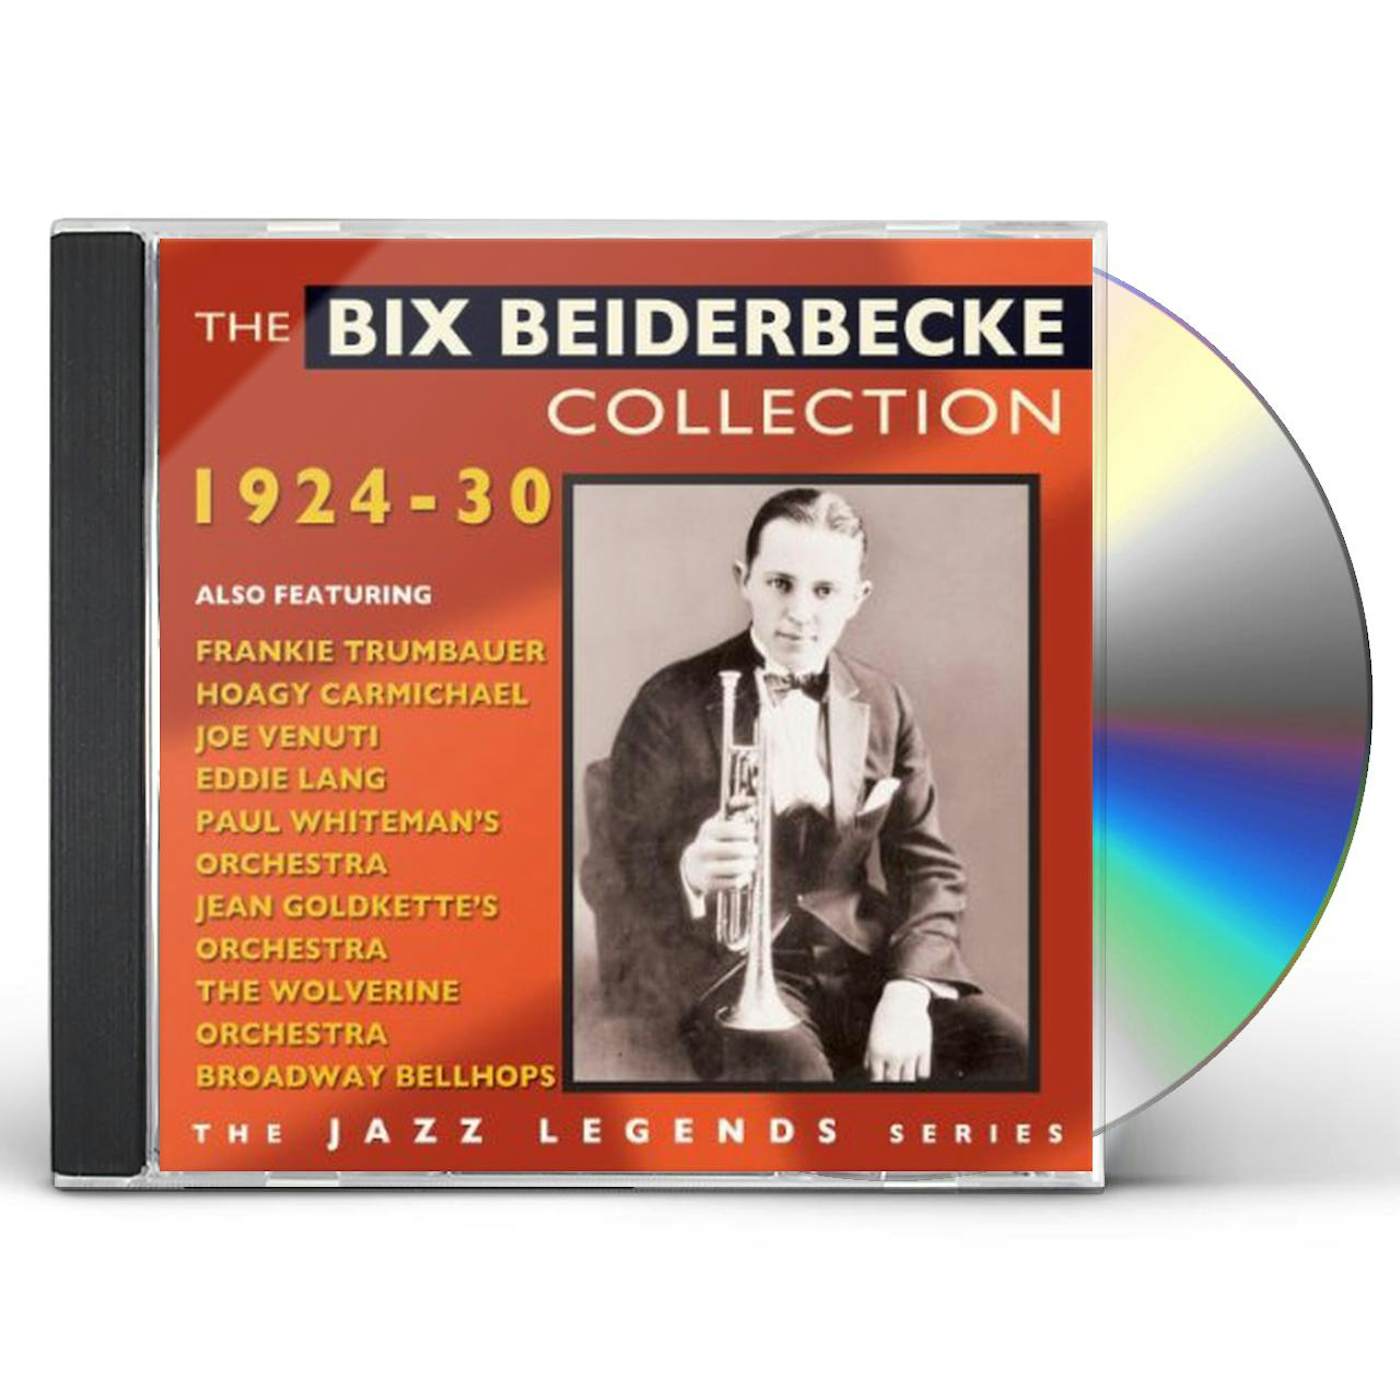 Bix Beiderbecke COLLECTION1924-30 CD